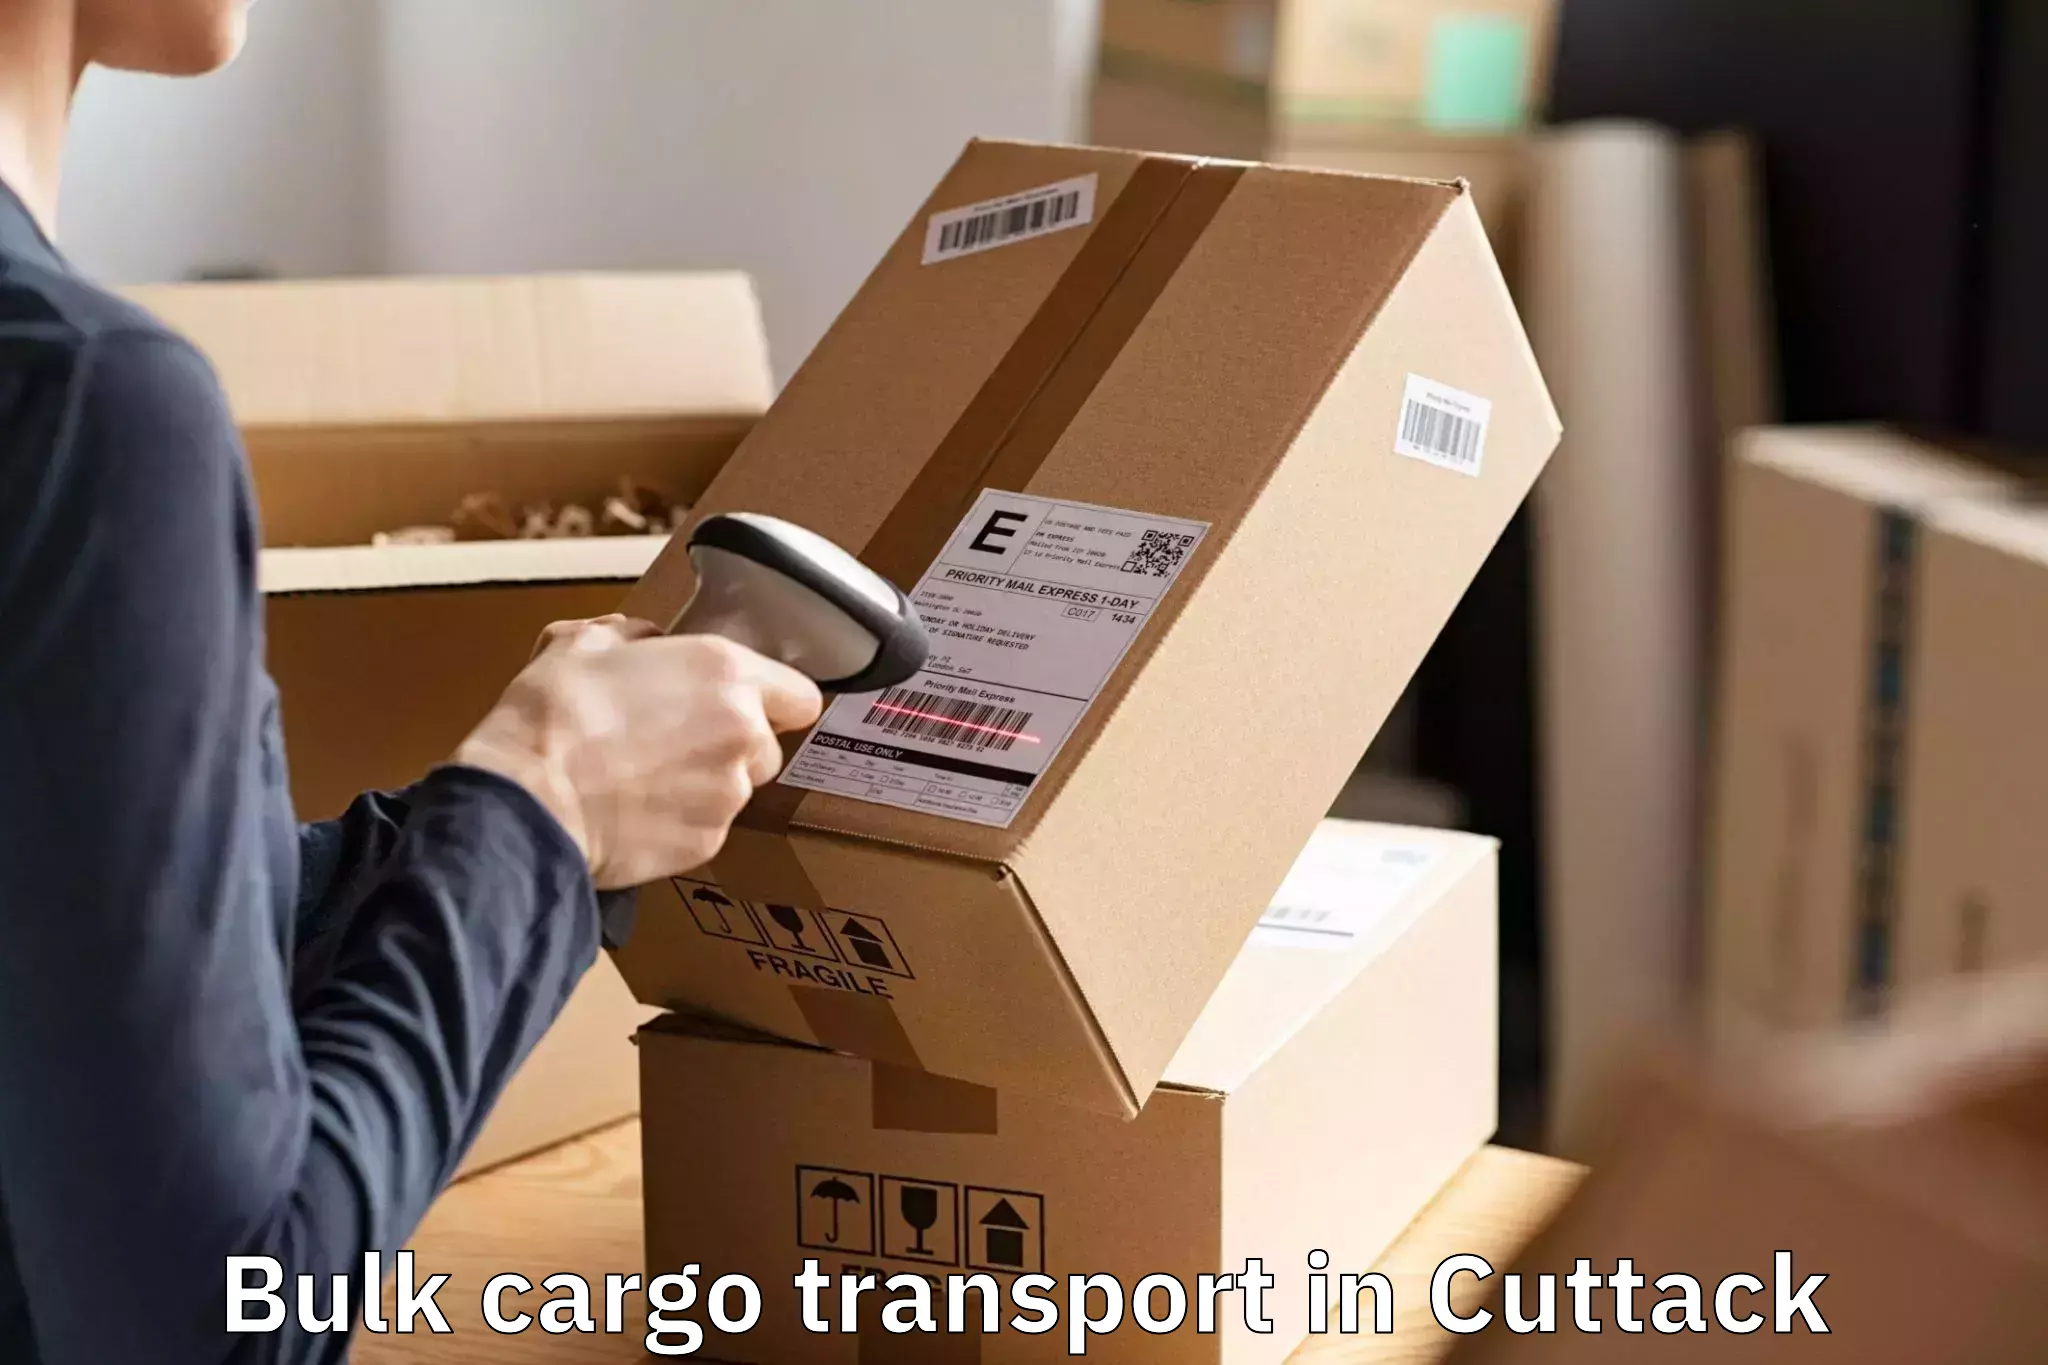 Professional Bulk Cargo Transport in Cuttack, Odisha (OR)